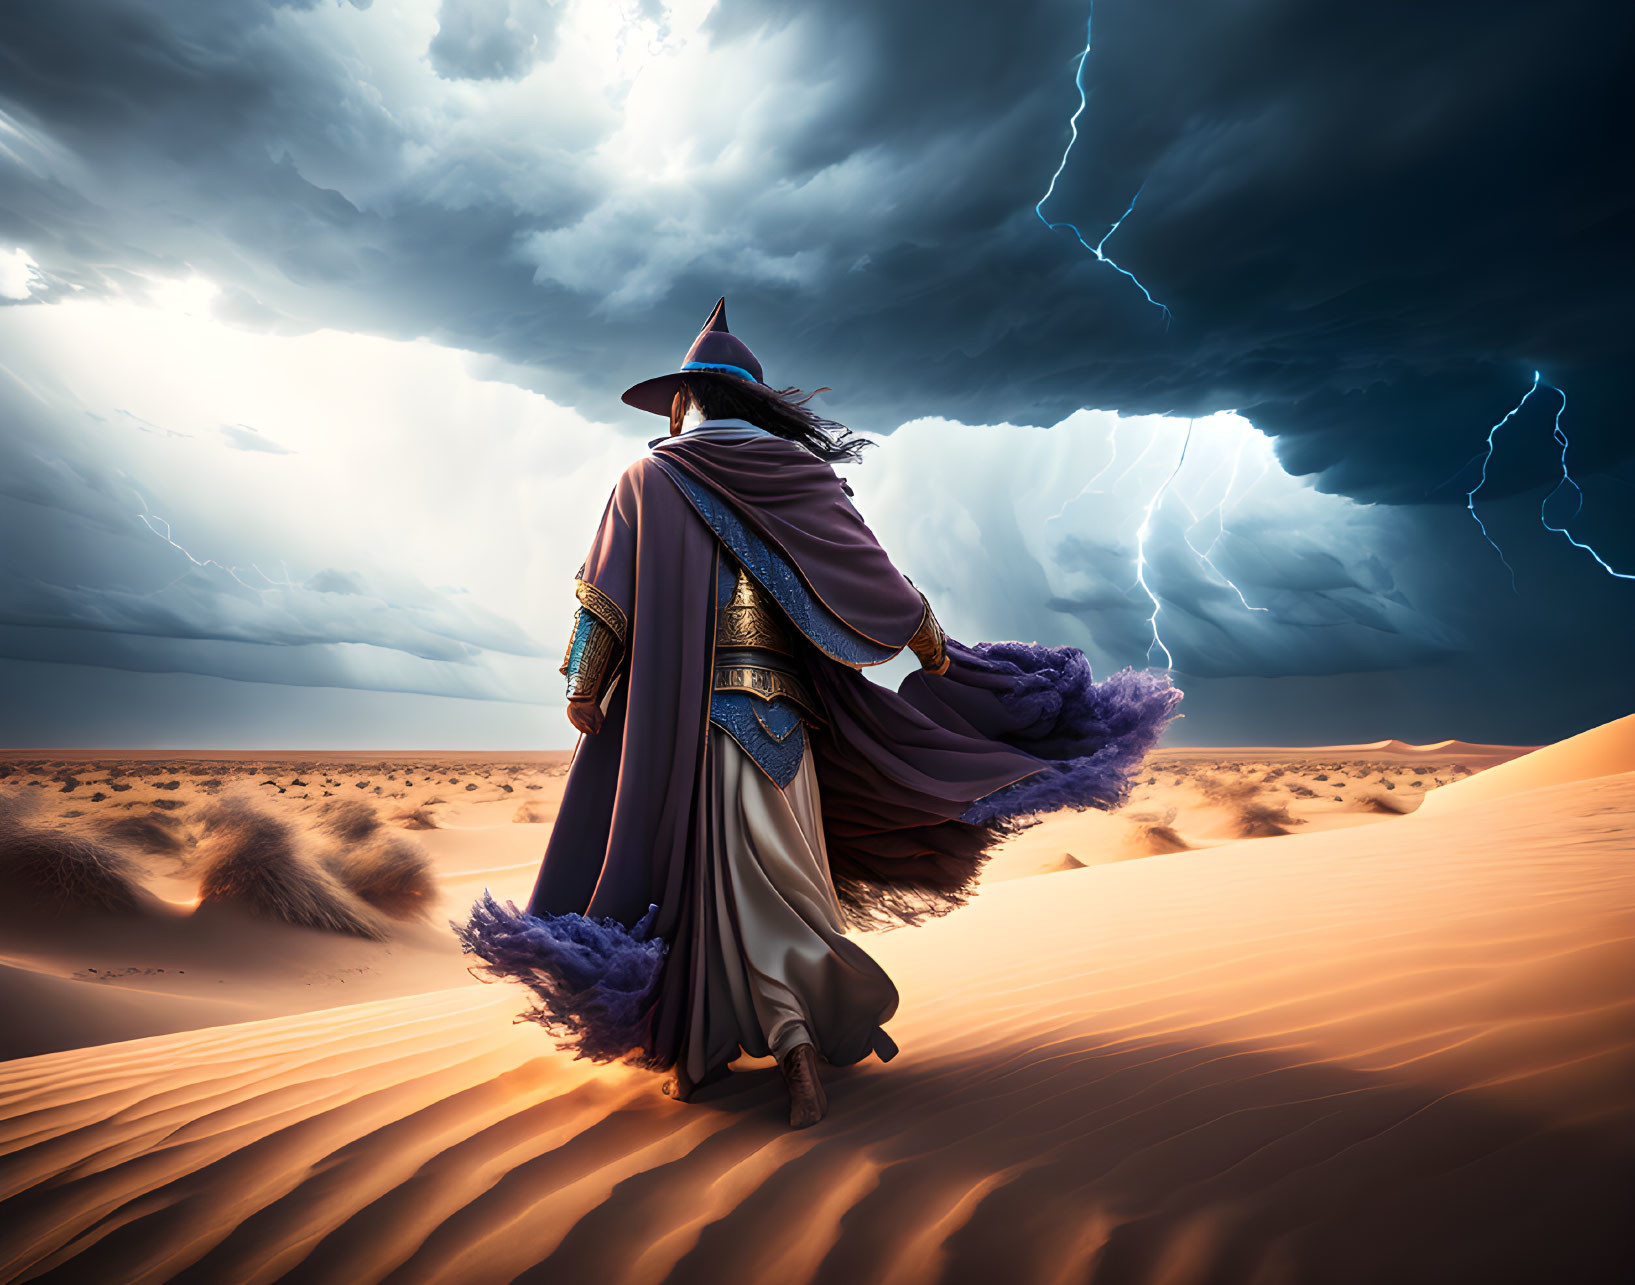 Storm Sky in Desert